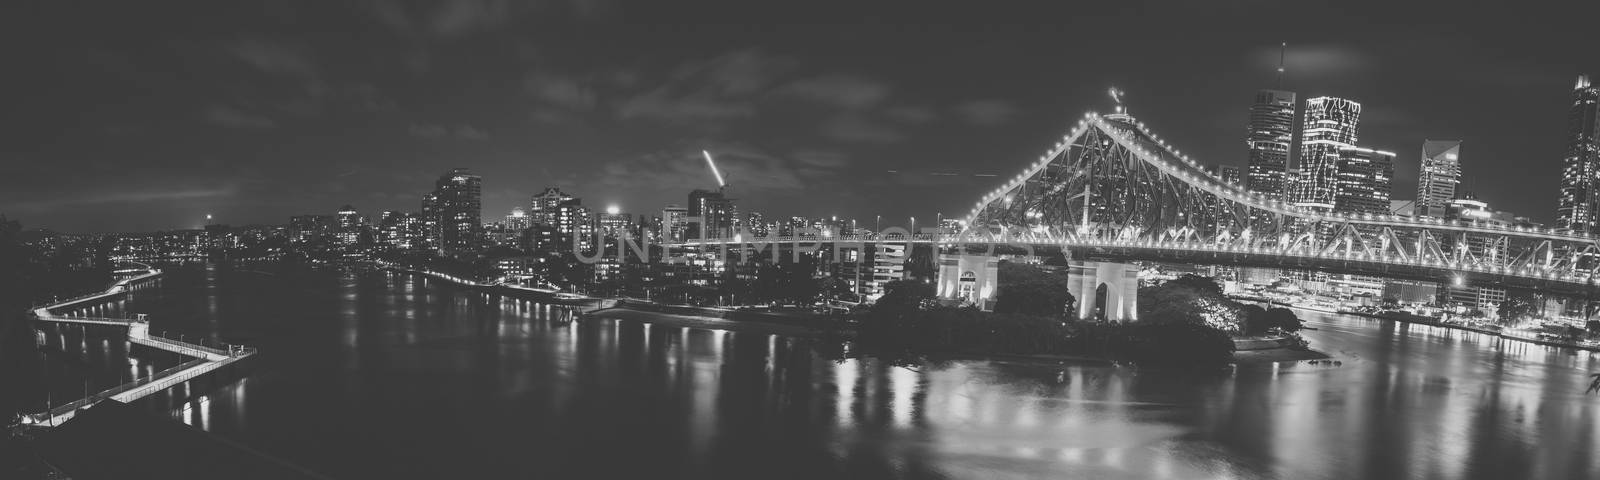 Story Bridge, river and Newfarm Riverwalk in Brisbane, Queenslan by artistrobd